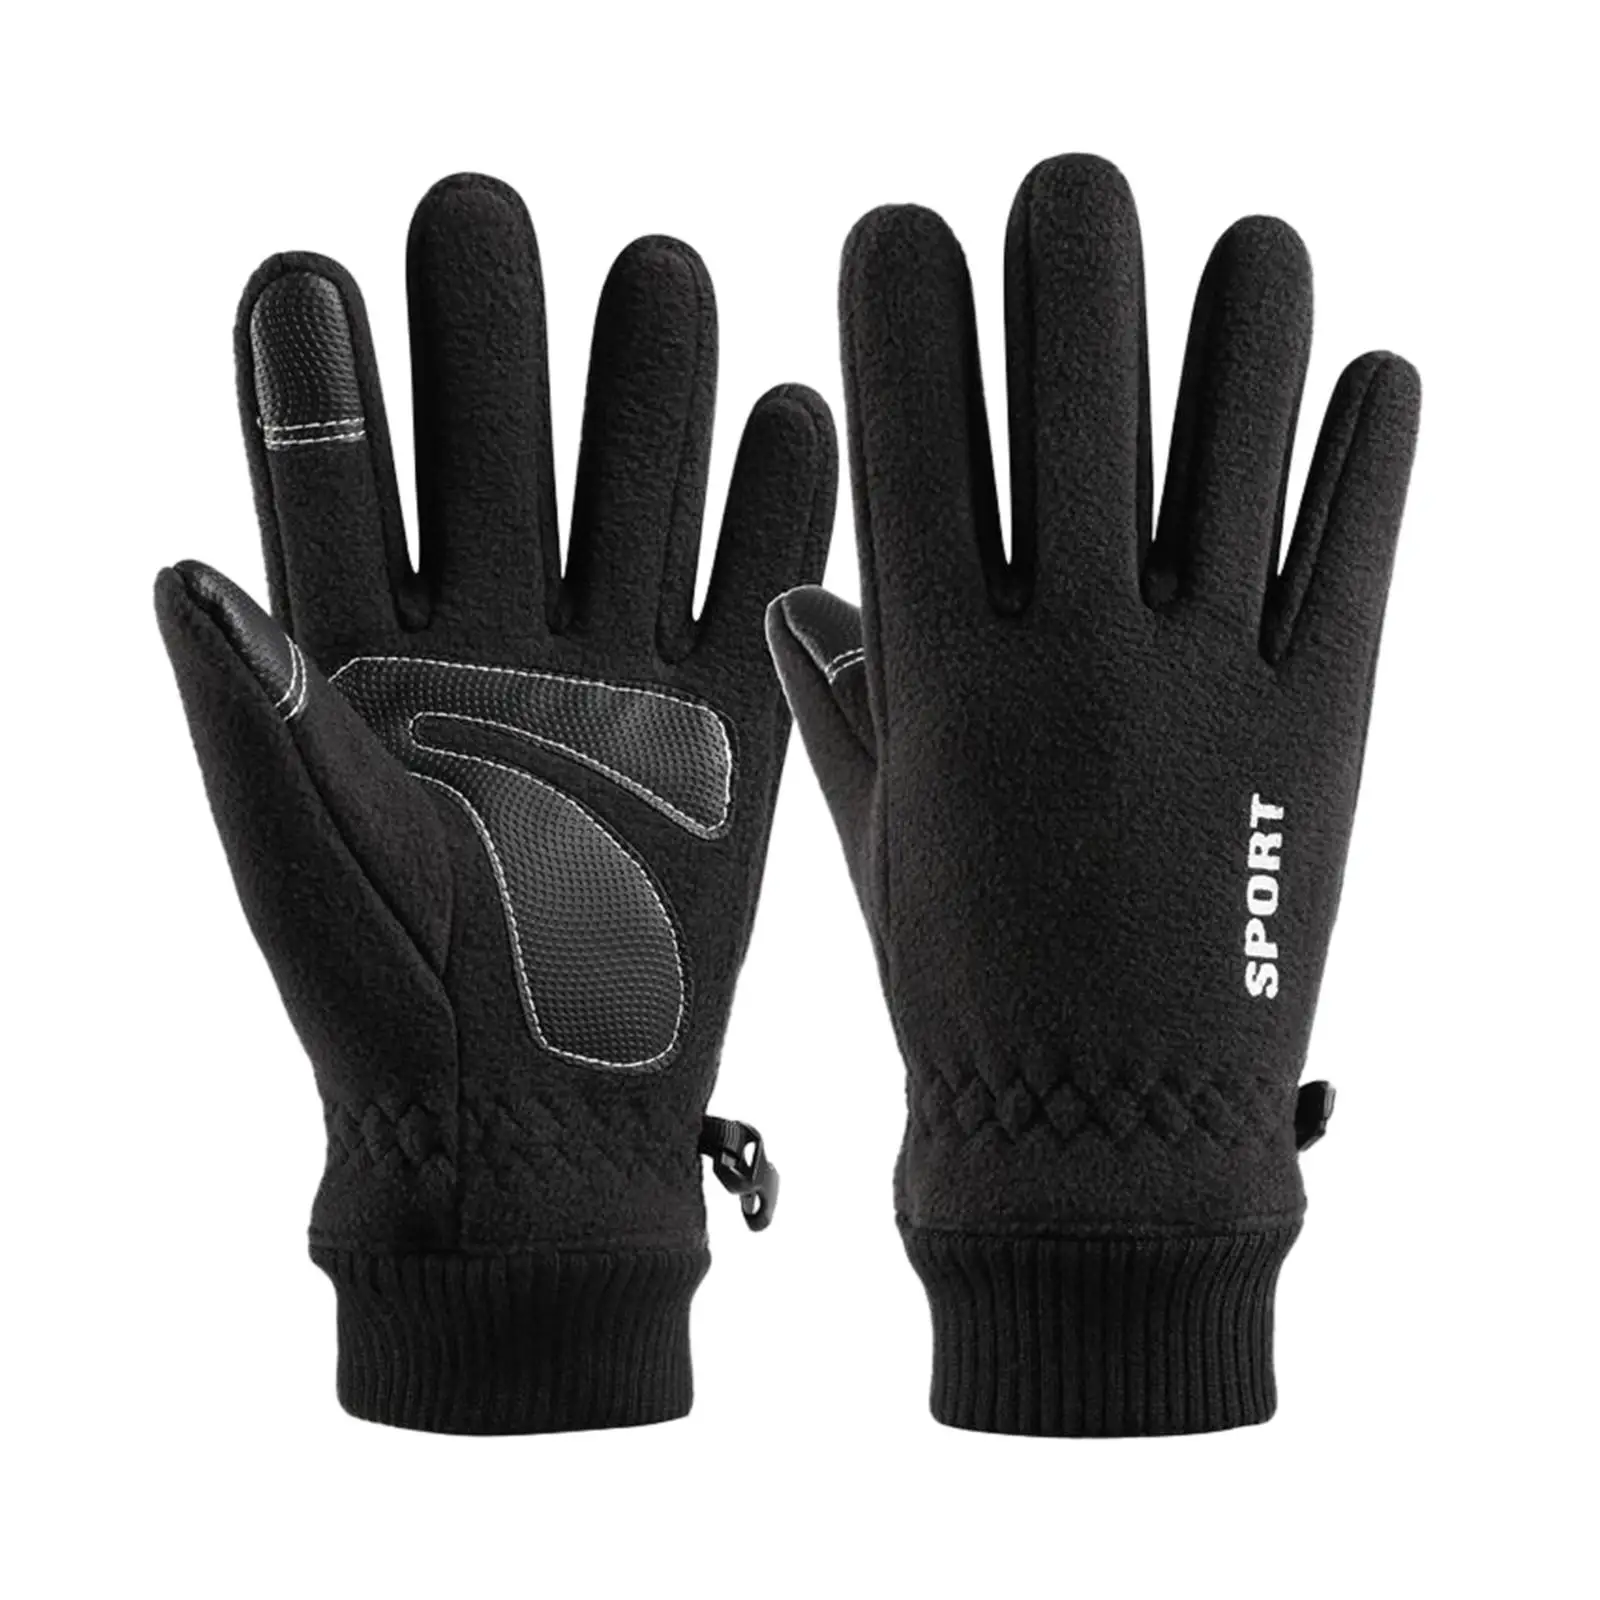 Winter Warm Gloves Anti Screen for Motorcycle workING men Women